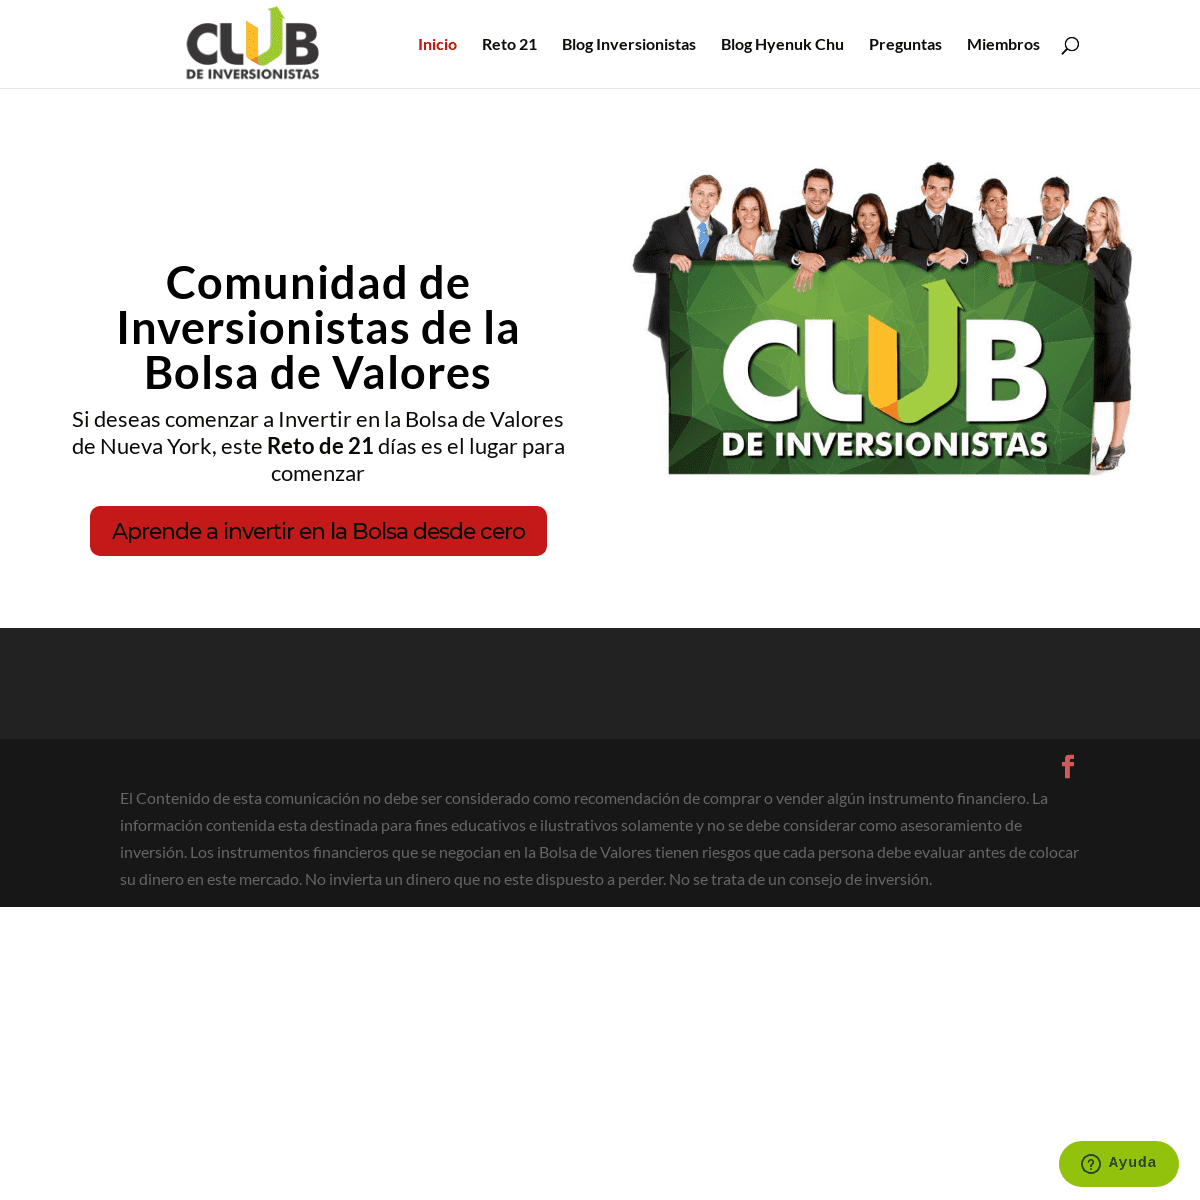 A complete backup of elclubdeinversionistas.com